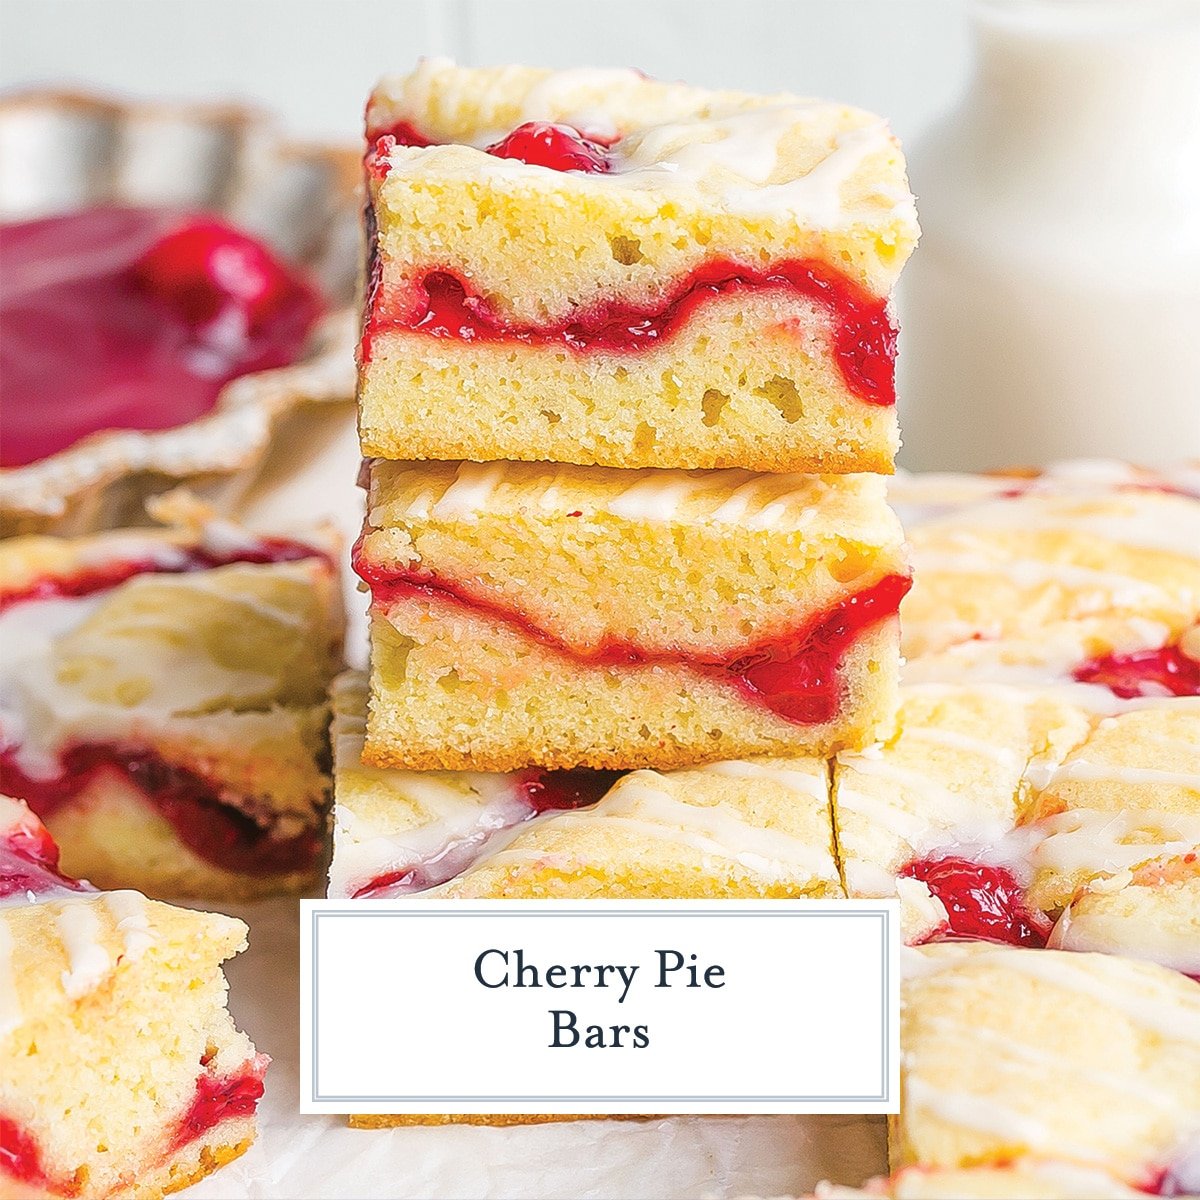 cherry pie bars with text overlay